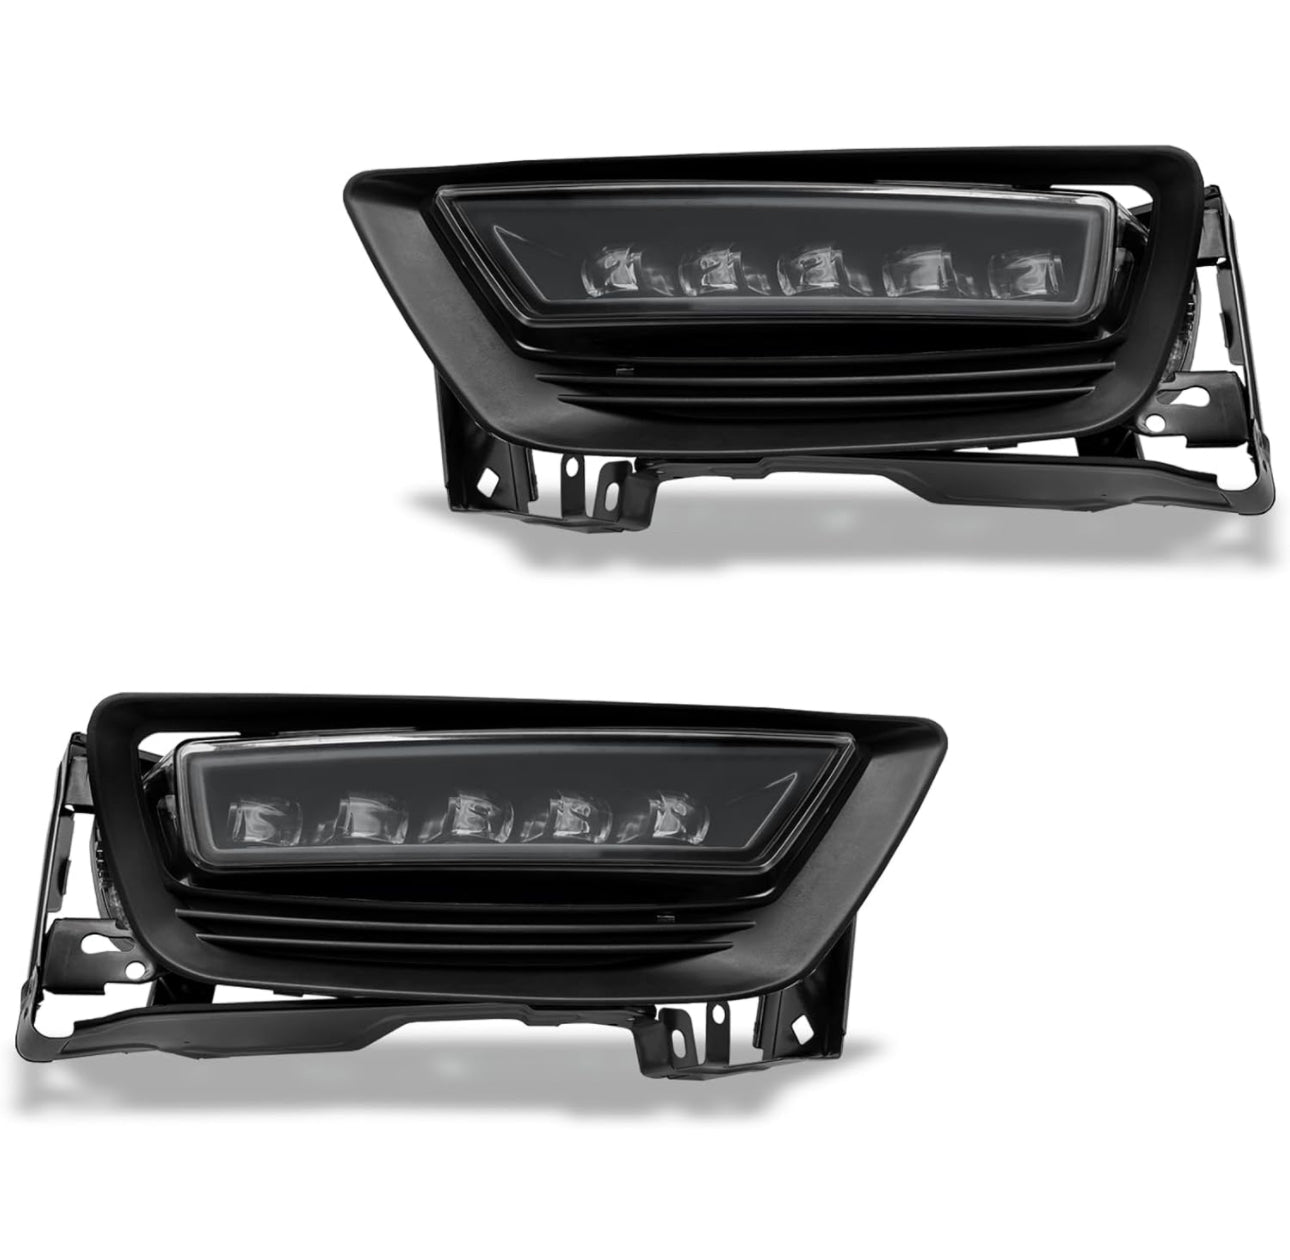 LED Fog Lights Fits for 2013-2015 Honda Accord 4 Door Sedan w/Switch Wirning Harness Clear Lens(1 set)